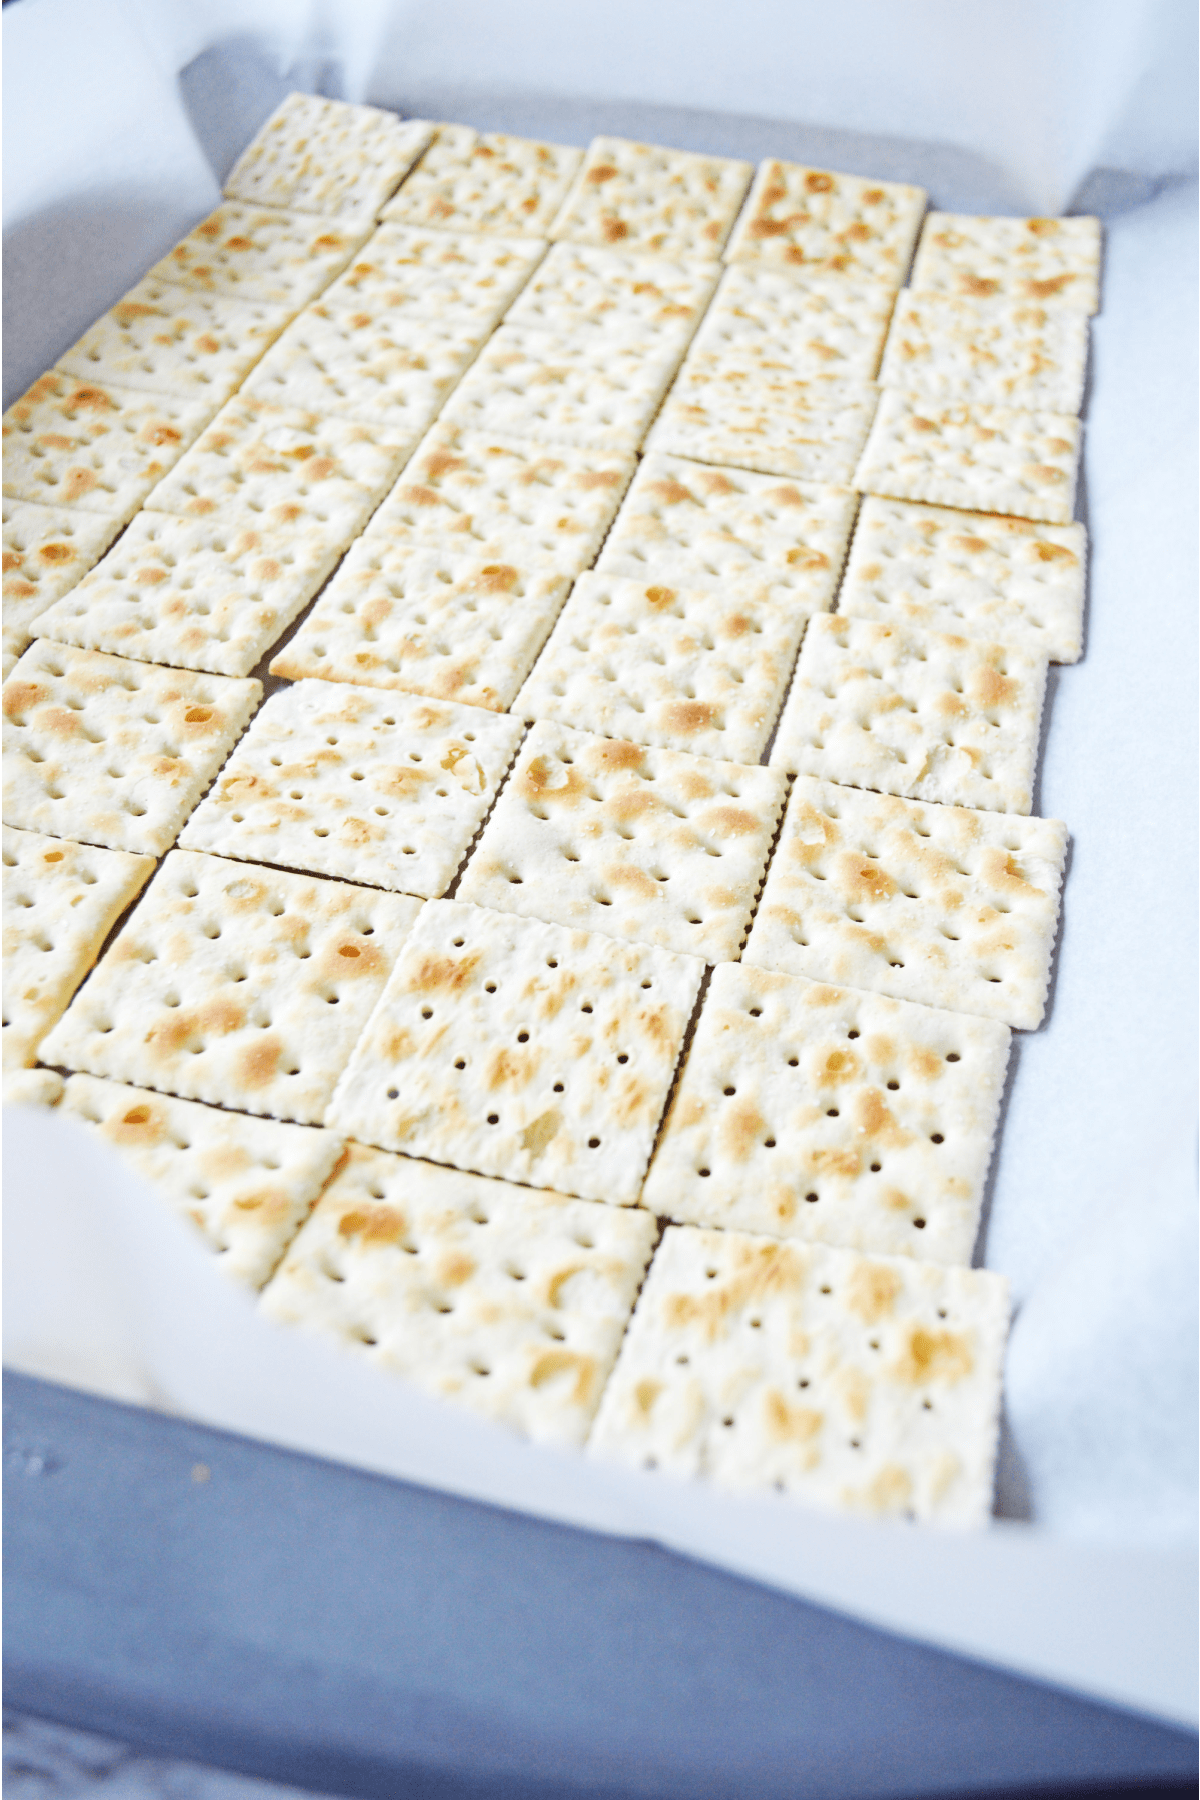 Crackers on baking sheet